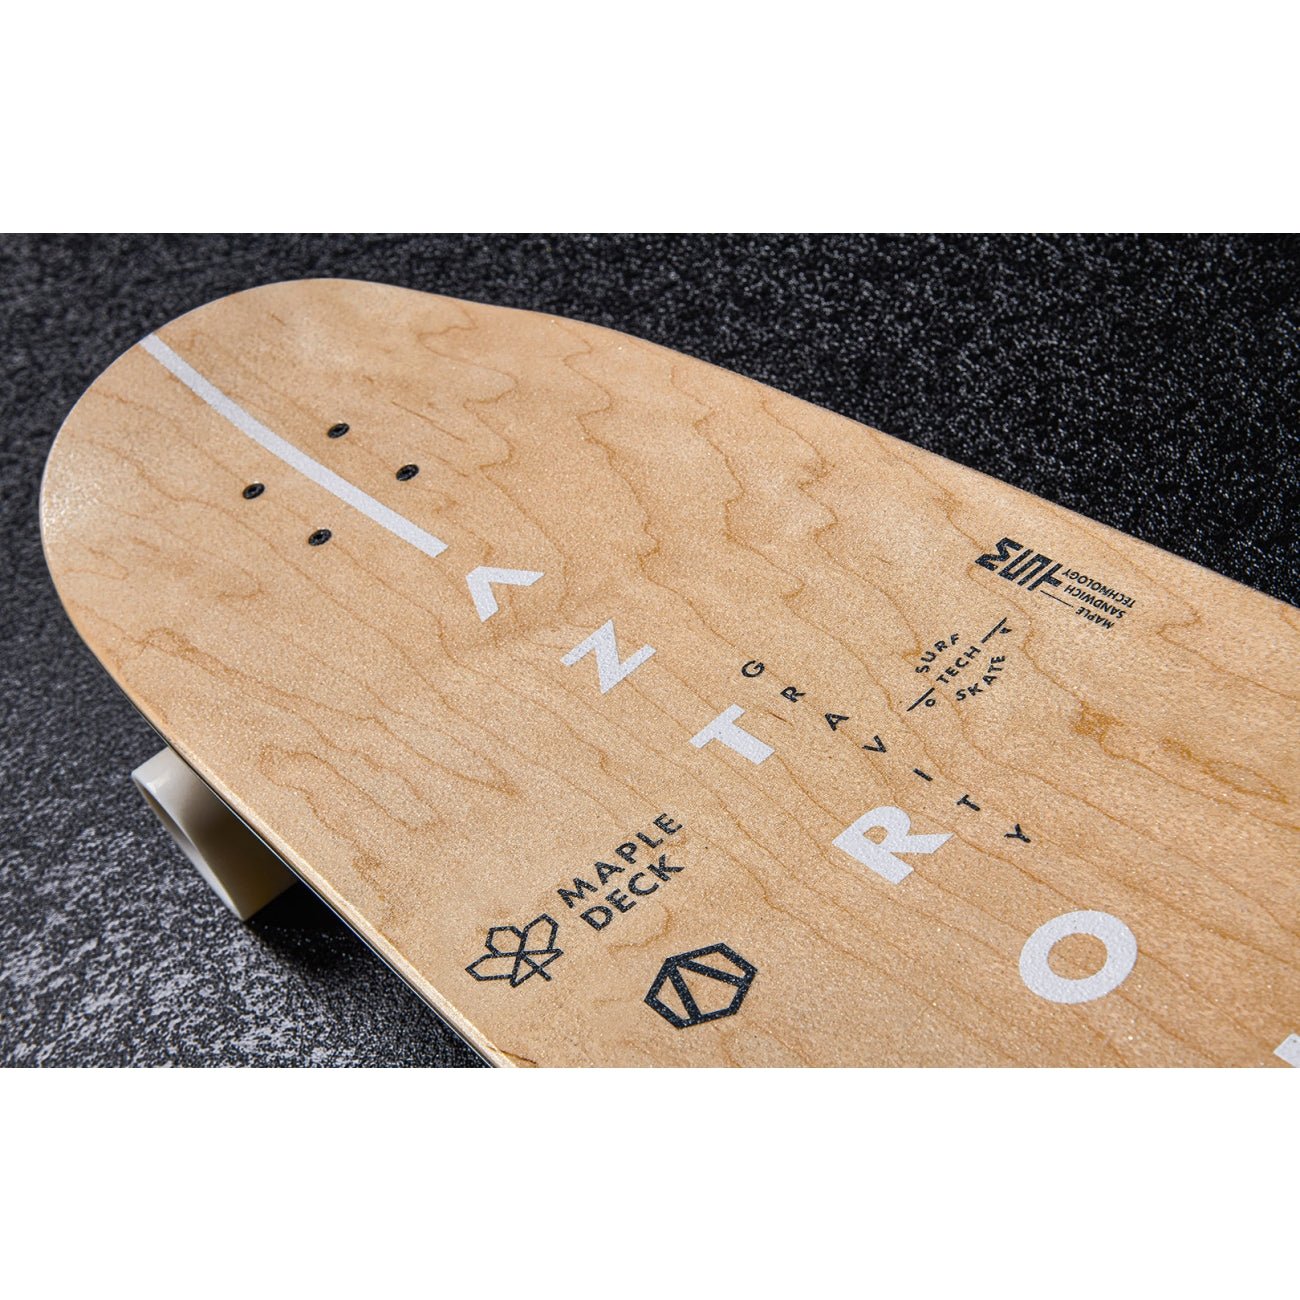 Aztron GRAVITY 42 longboard Surfskate - Worthing Watersports - AK-420 - Skateboards - Aztron